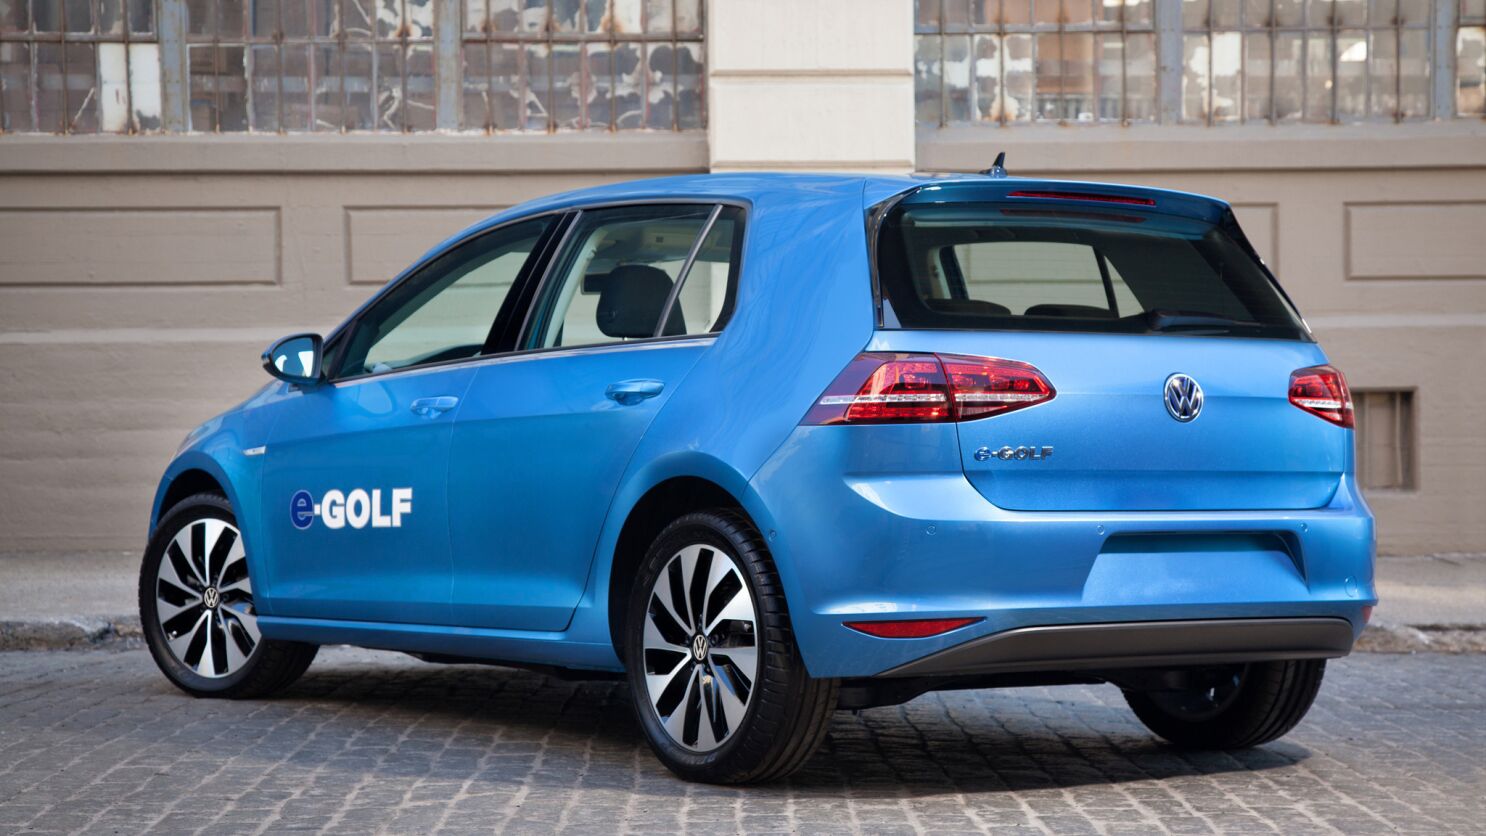 analyse Fjerde skulder Photos: 2015 Volkswagen e-Golf - Los Angeles Times